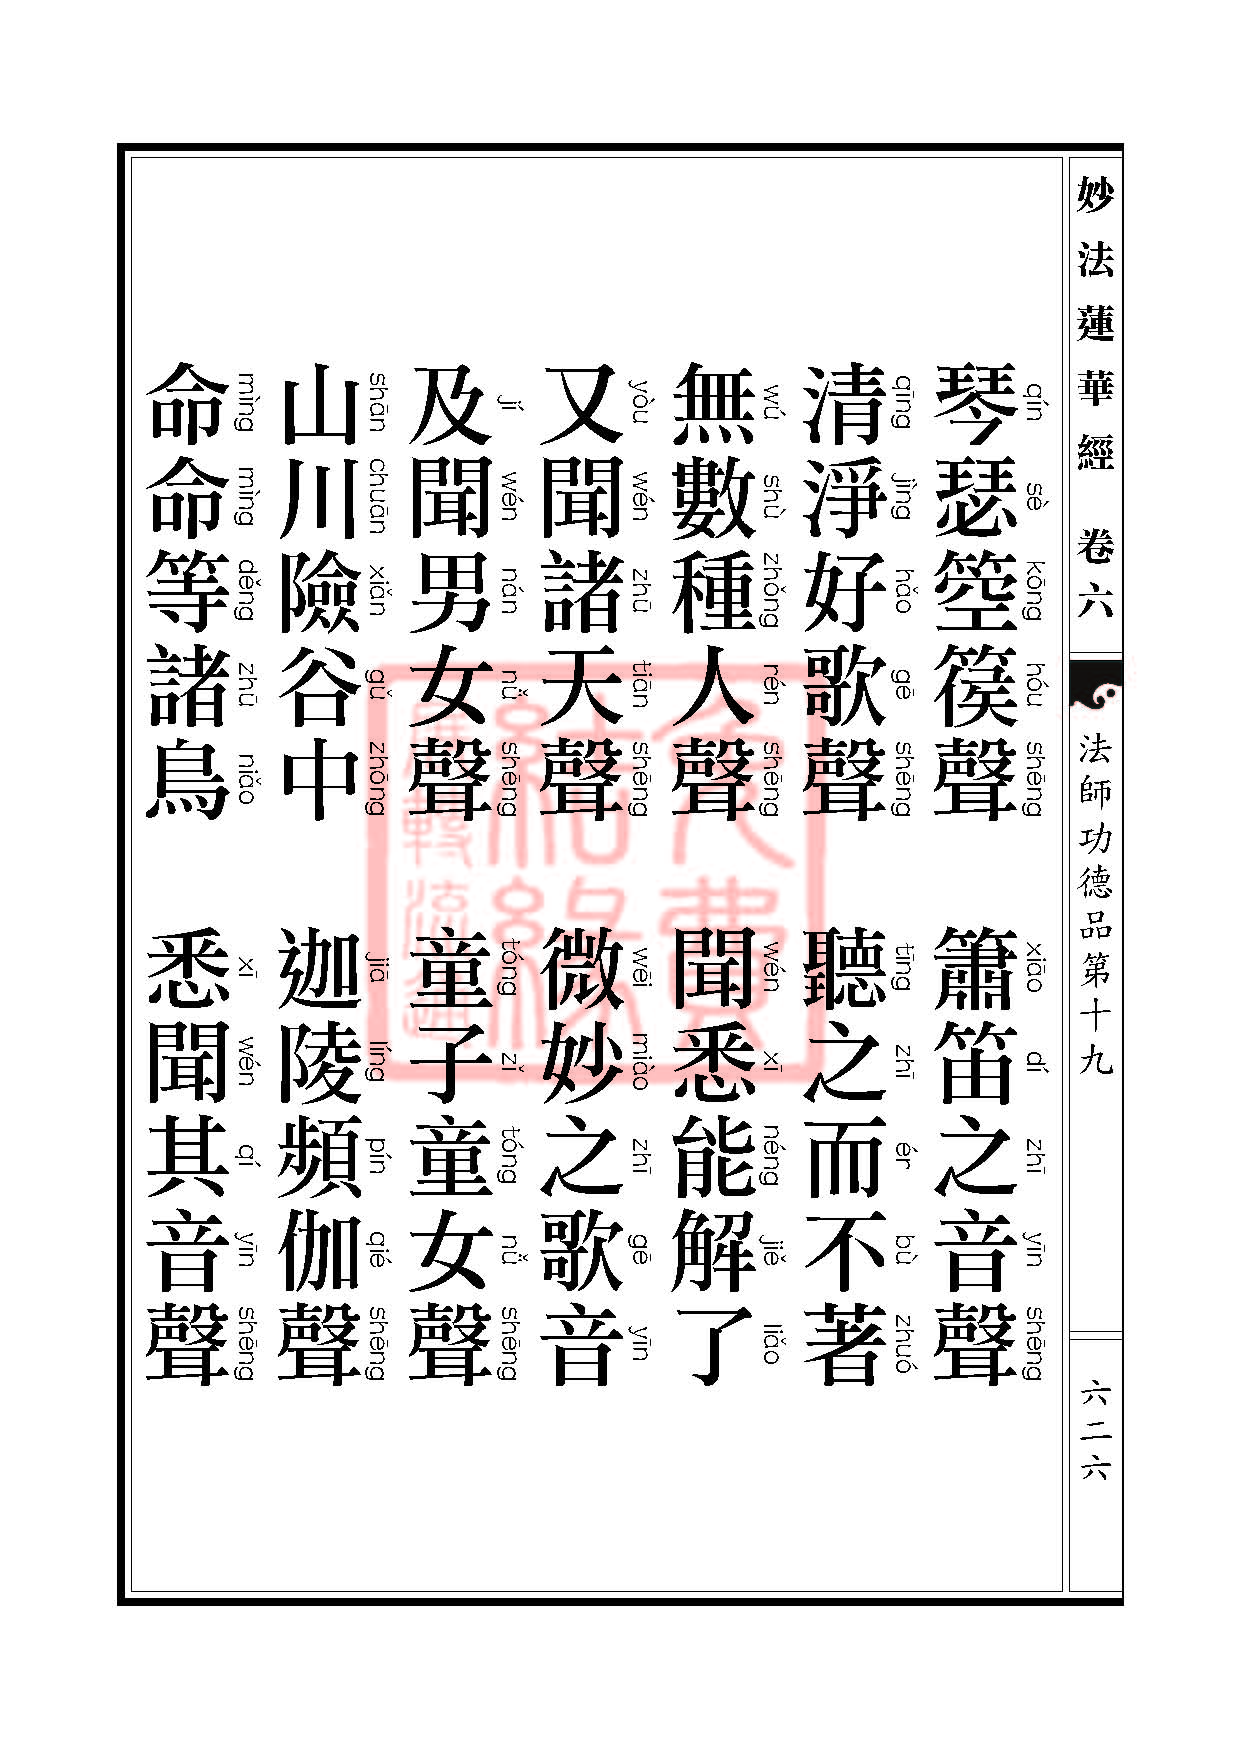 Book_FHJ_HK-A6-PY_Web_ҳ_626.jpg